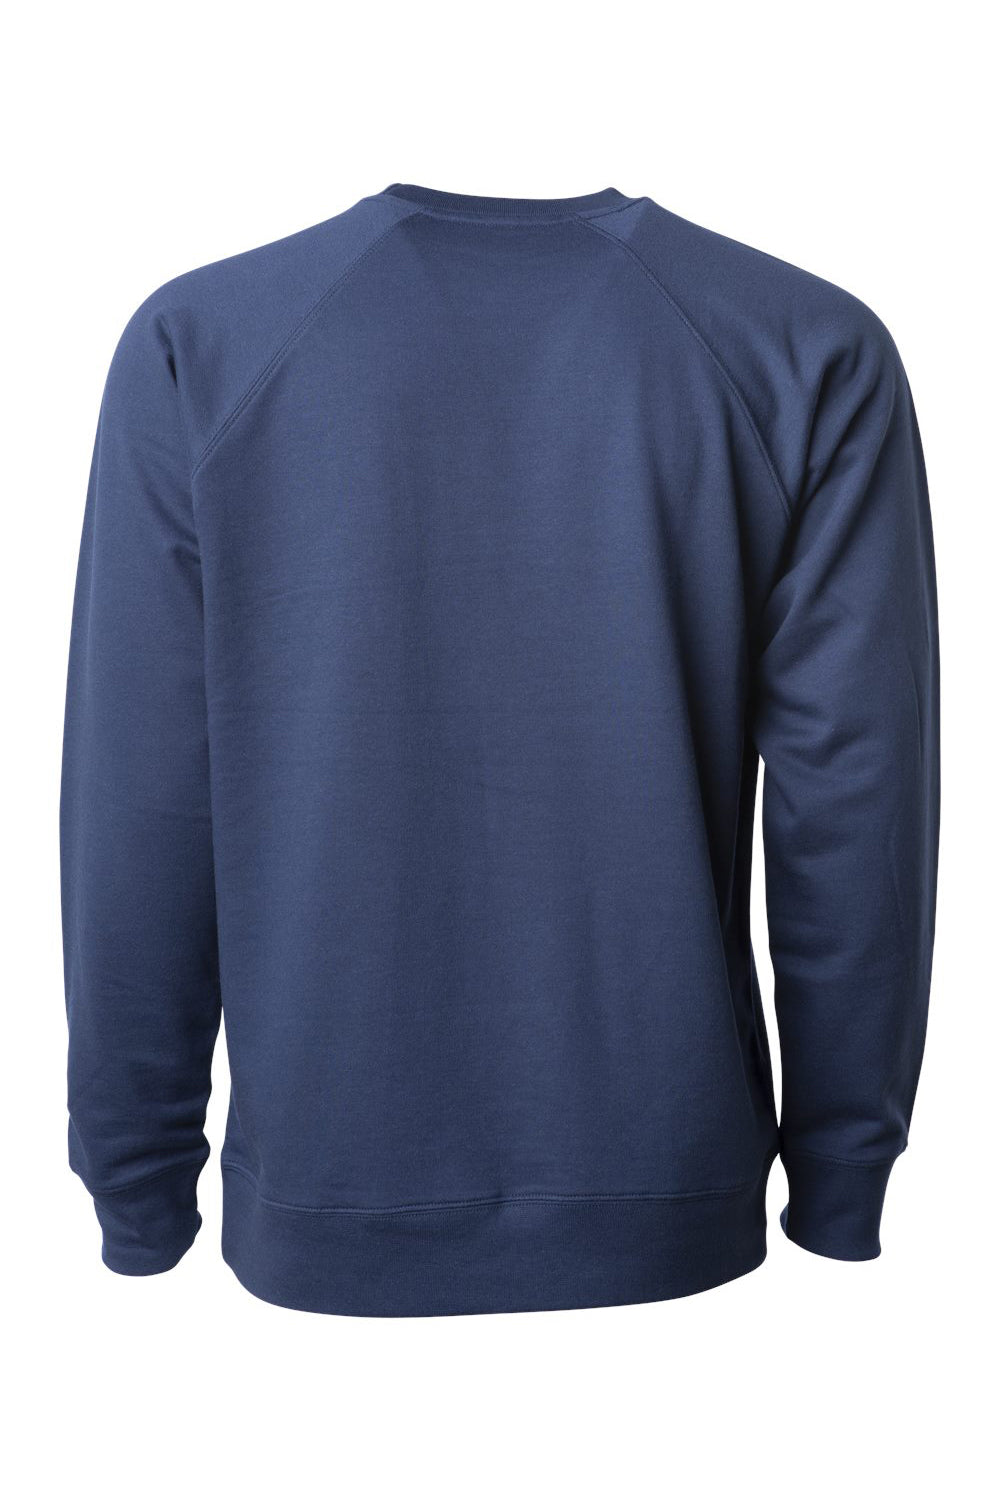 Independent Trading Co. SS1000C Mens Icon Loopback Terry Crewneck Sweatshirt Indigo Blue Flat Back